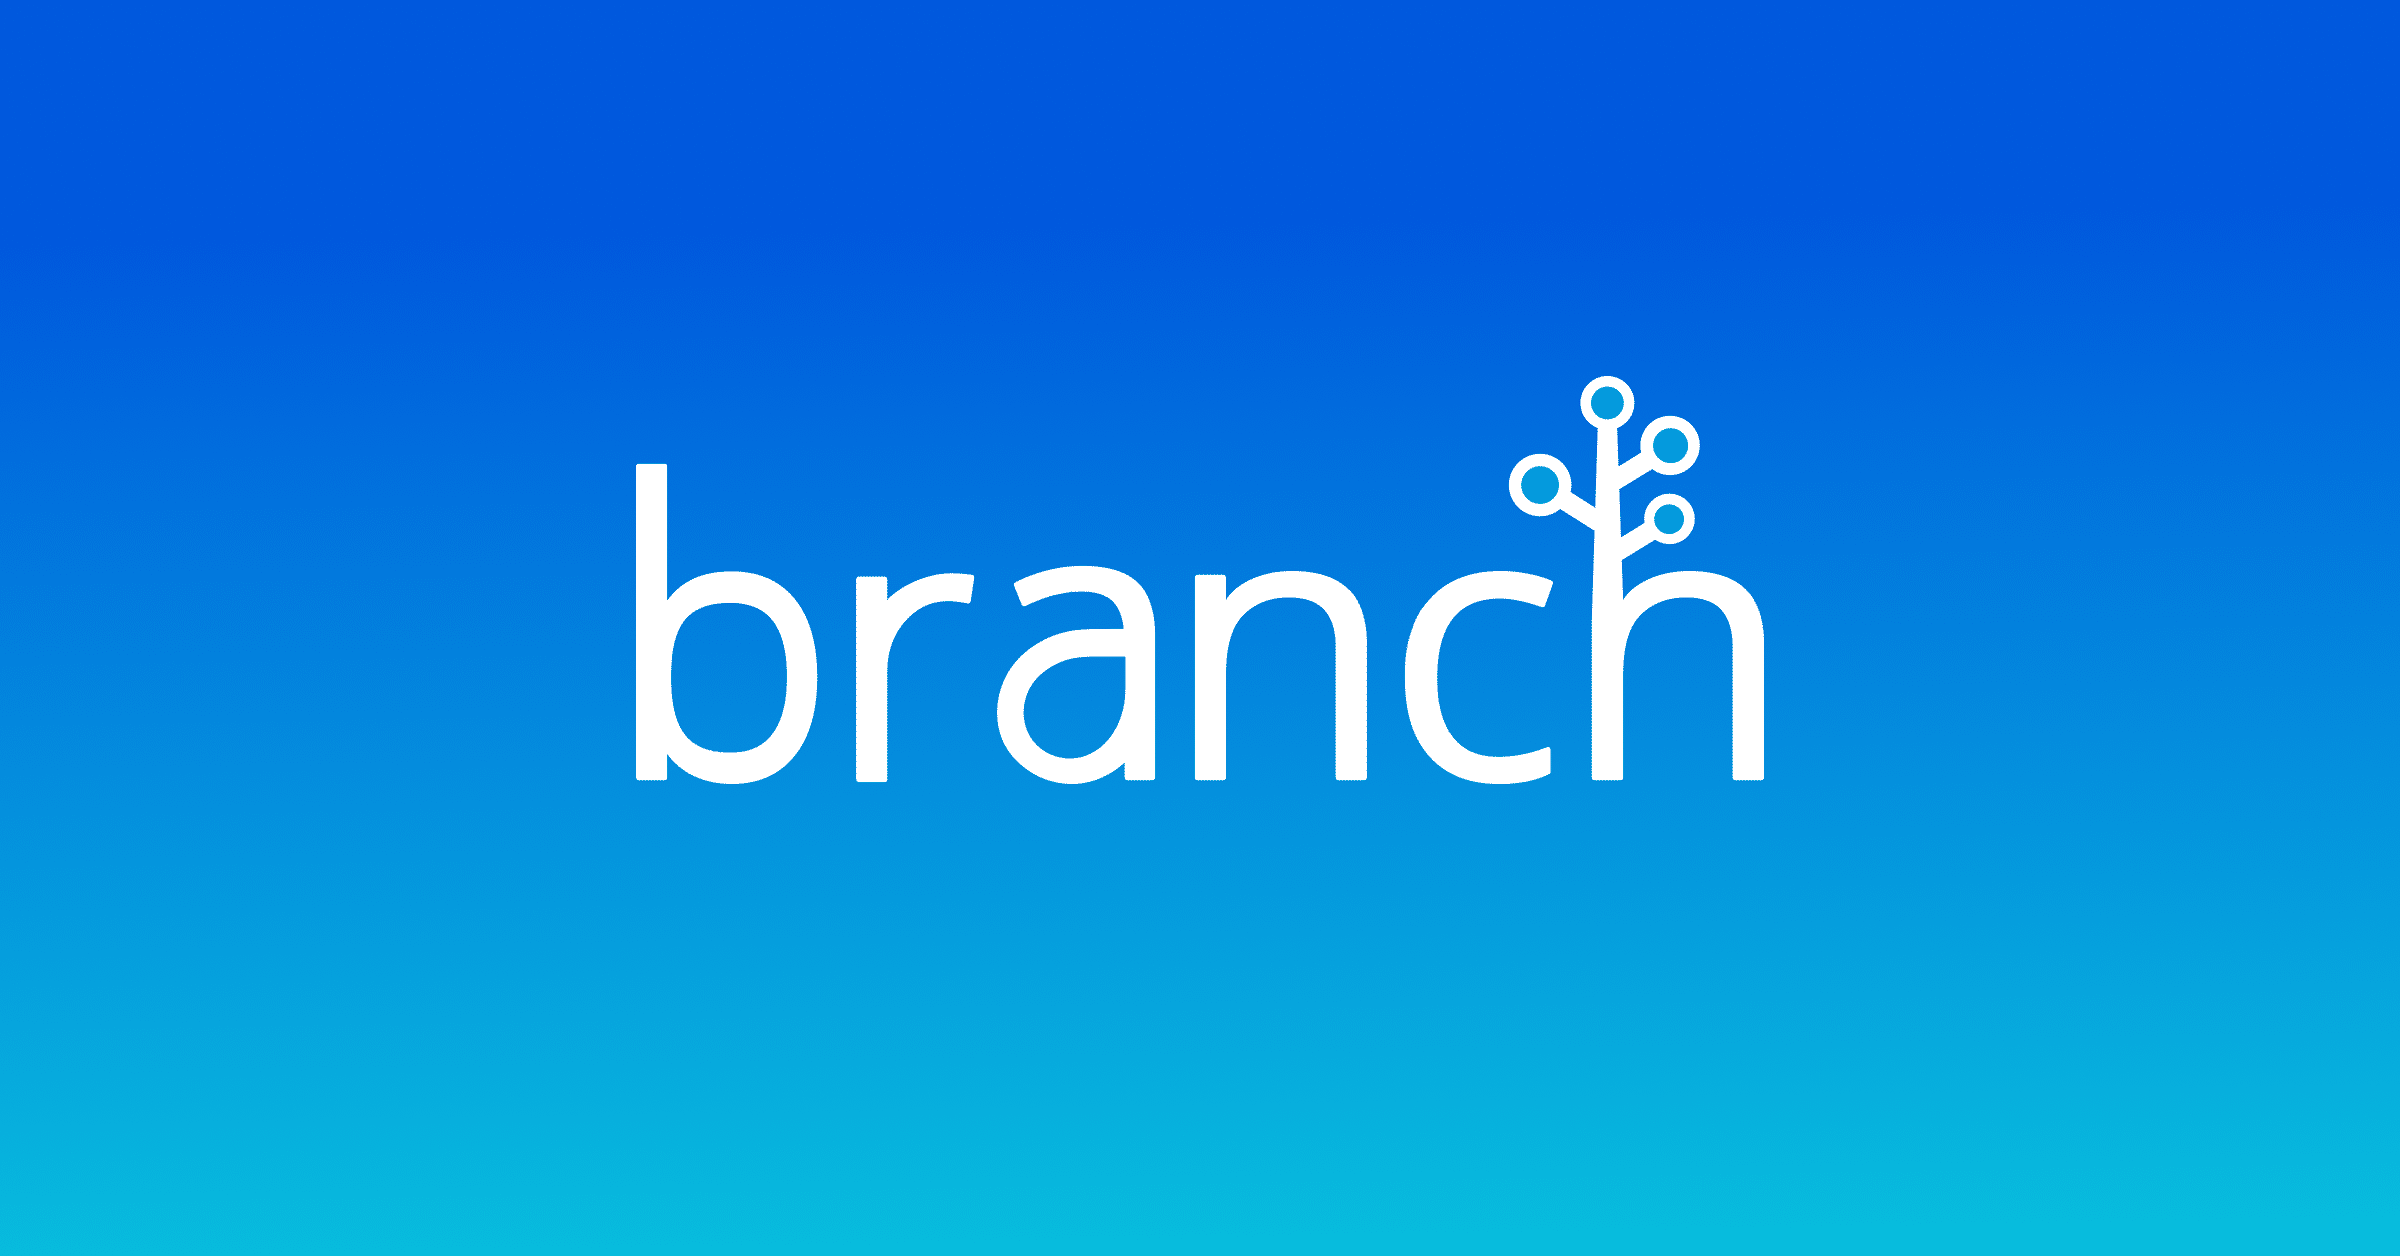 Ad Network - Branch